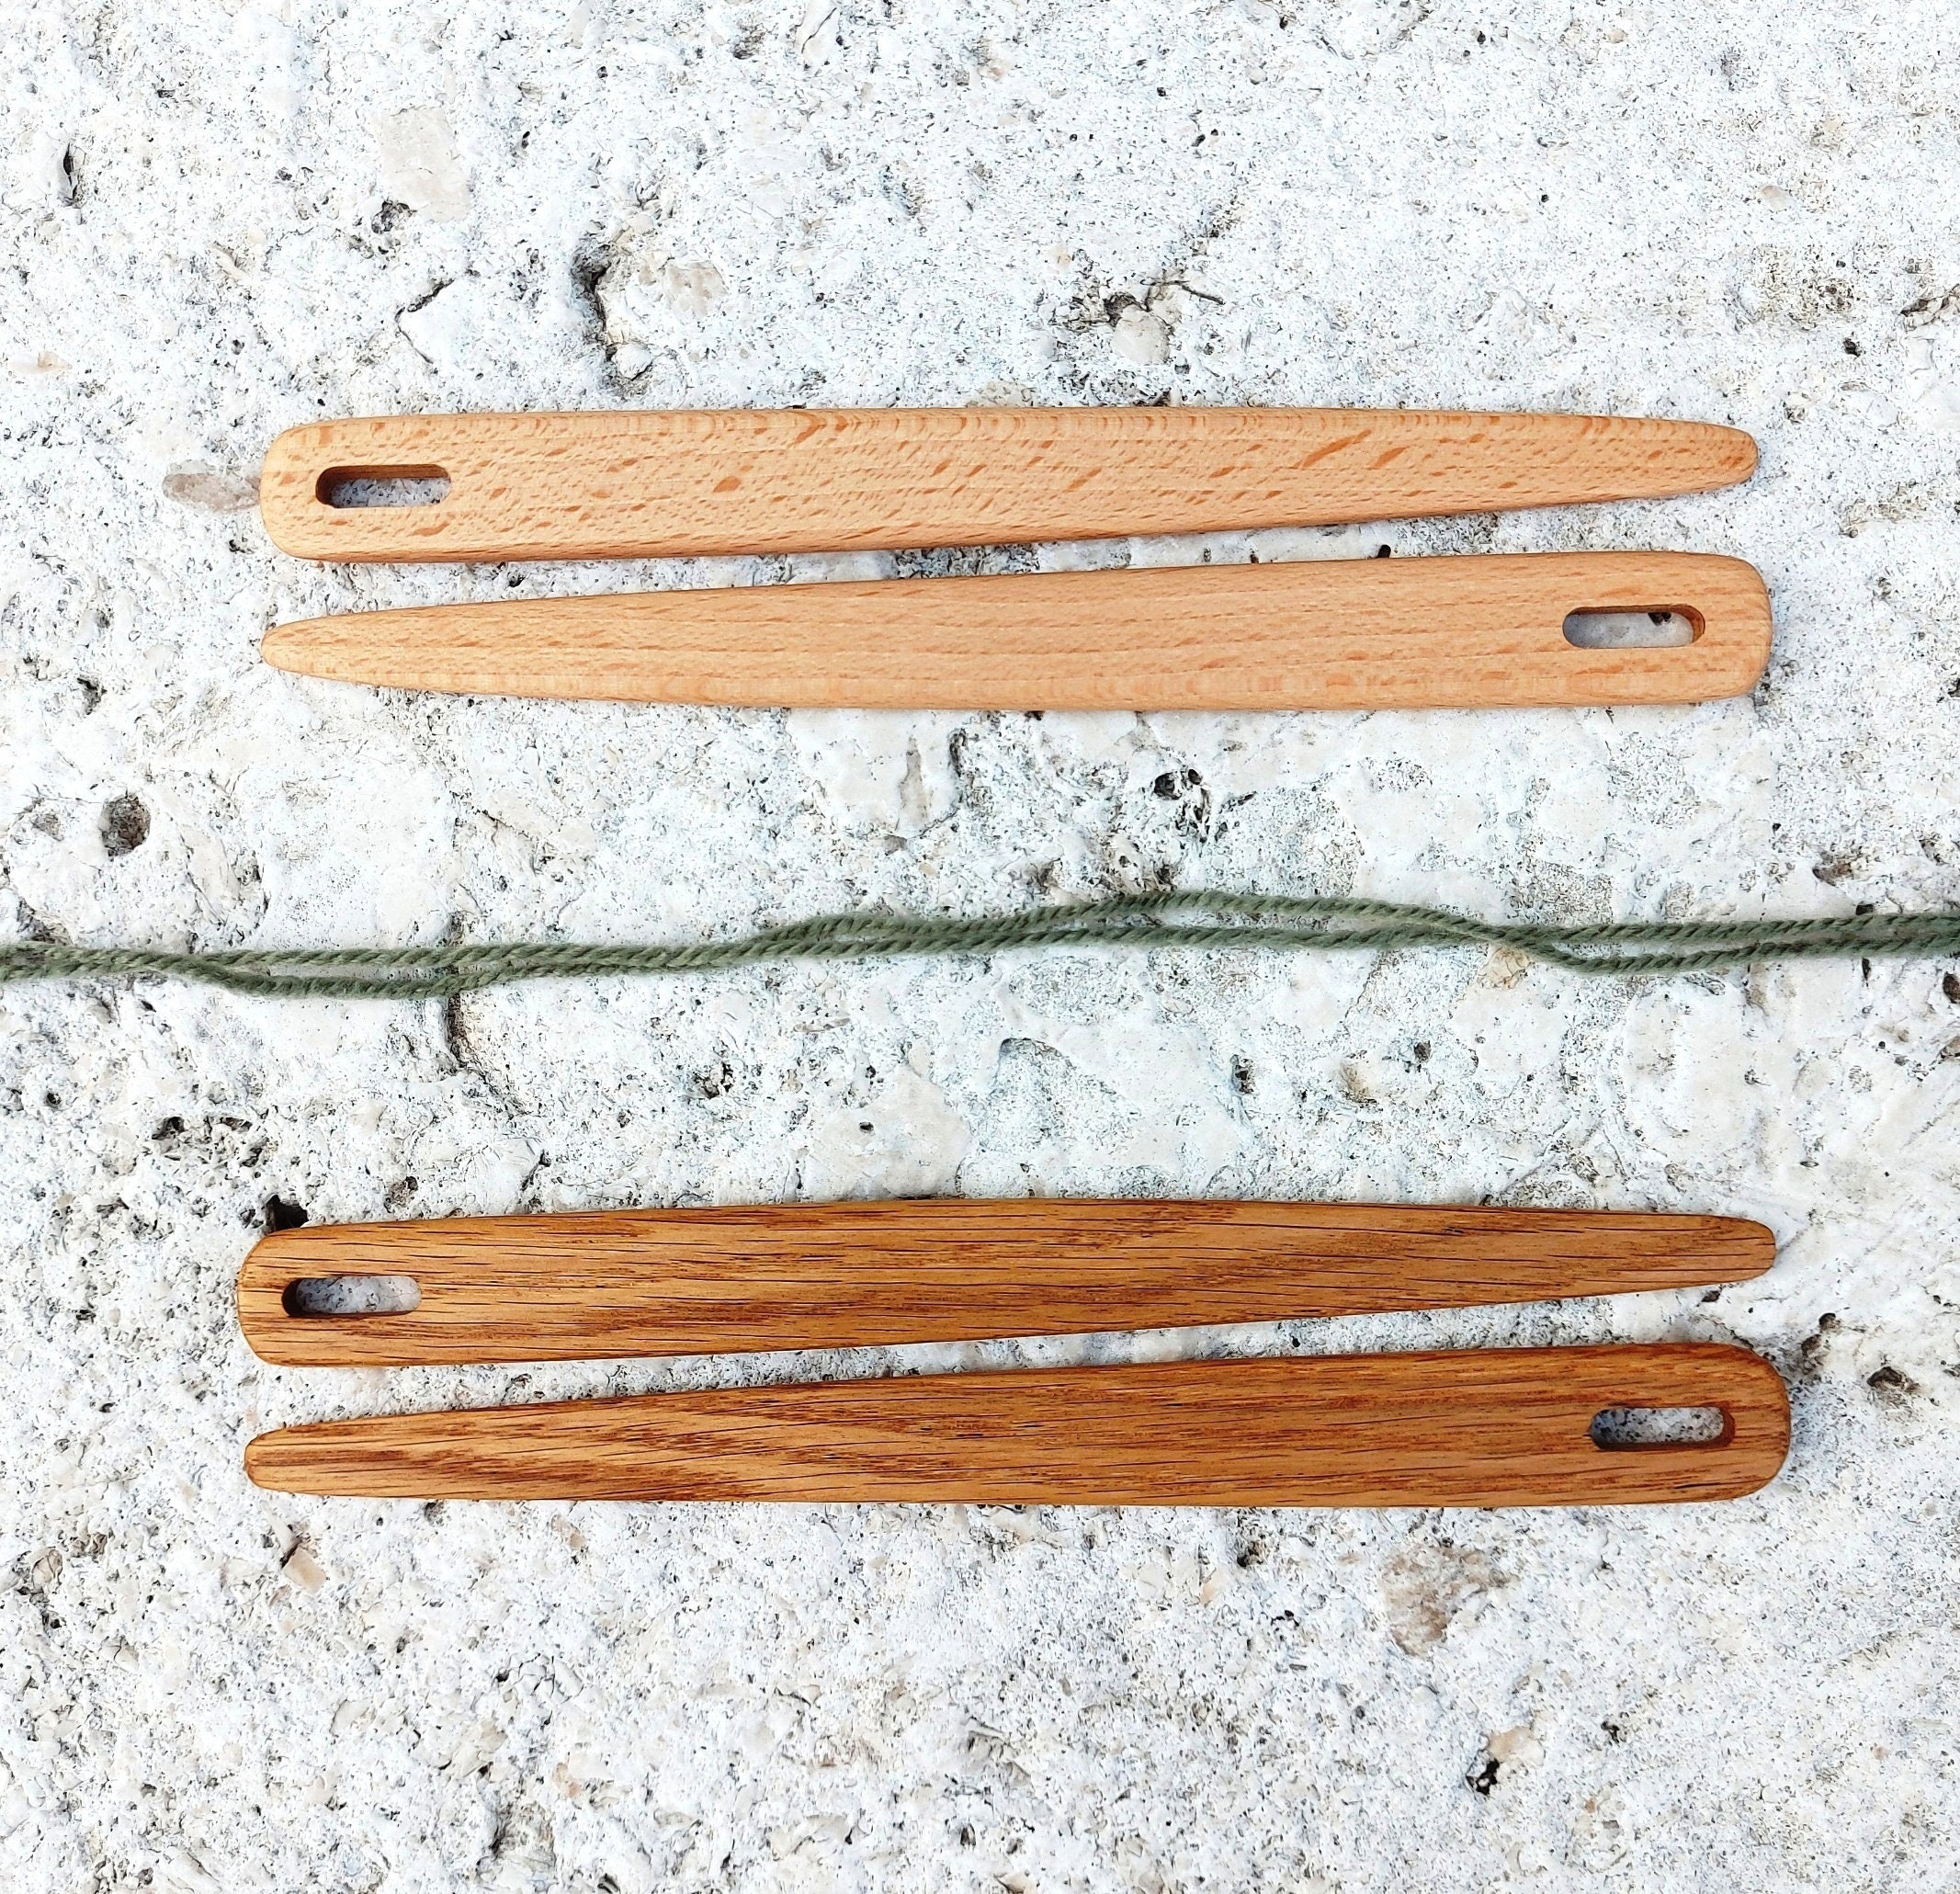 Wooden Weaving Needle